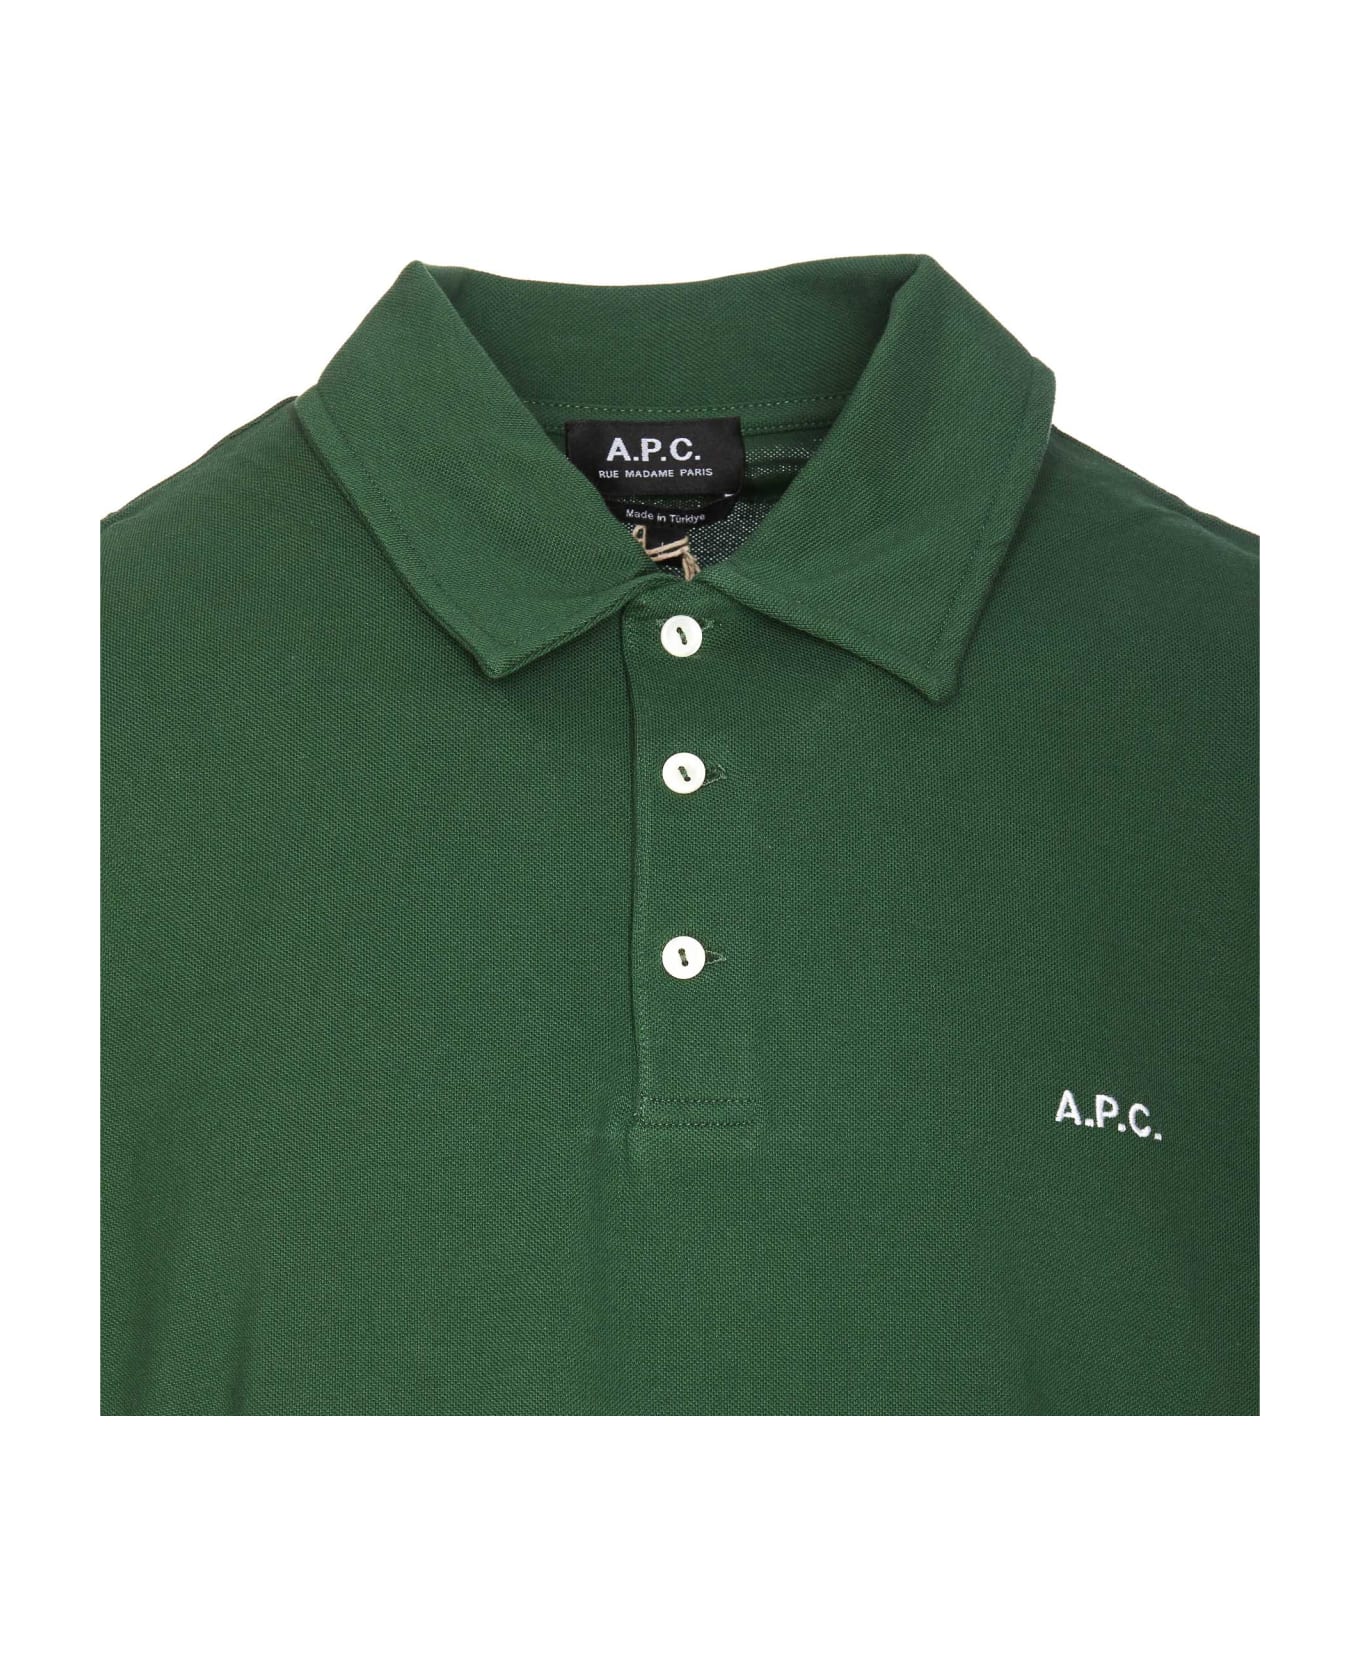 A.P.C. Austin Polo - Green ポロシャツ